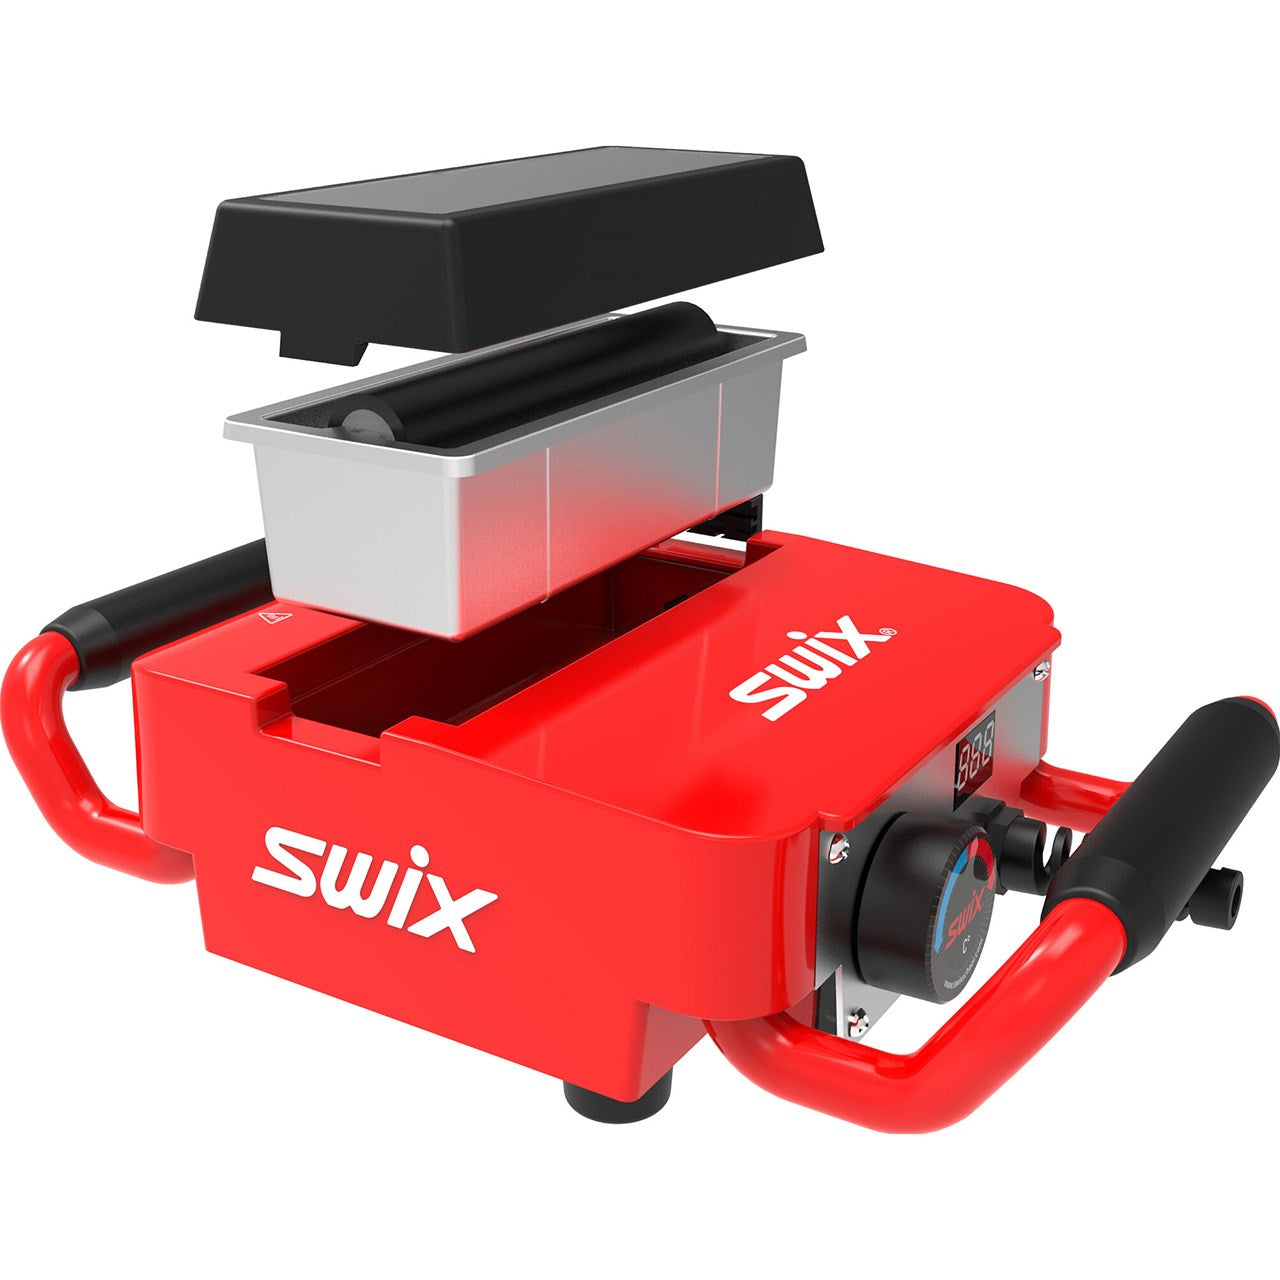 Swix Wax Tray for T60 Waxing Machine